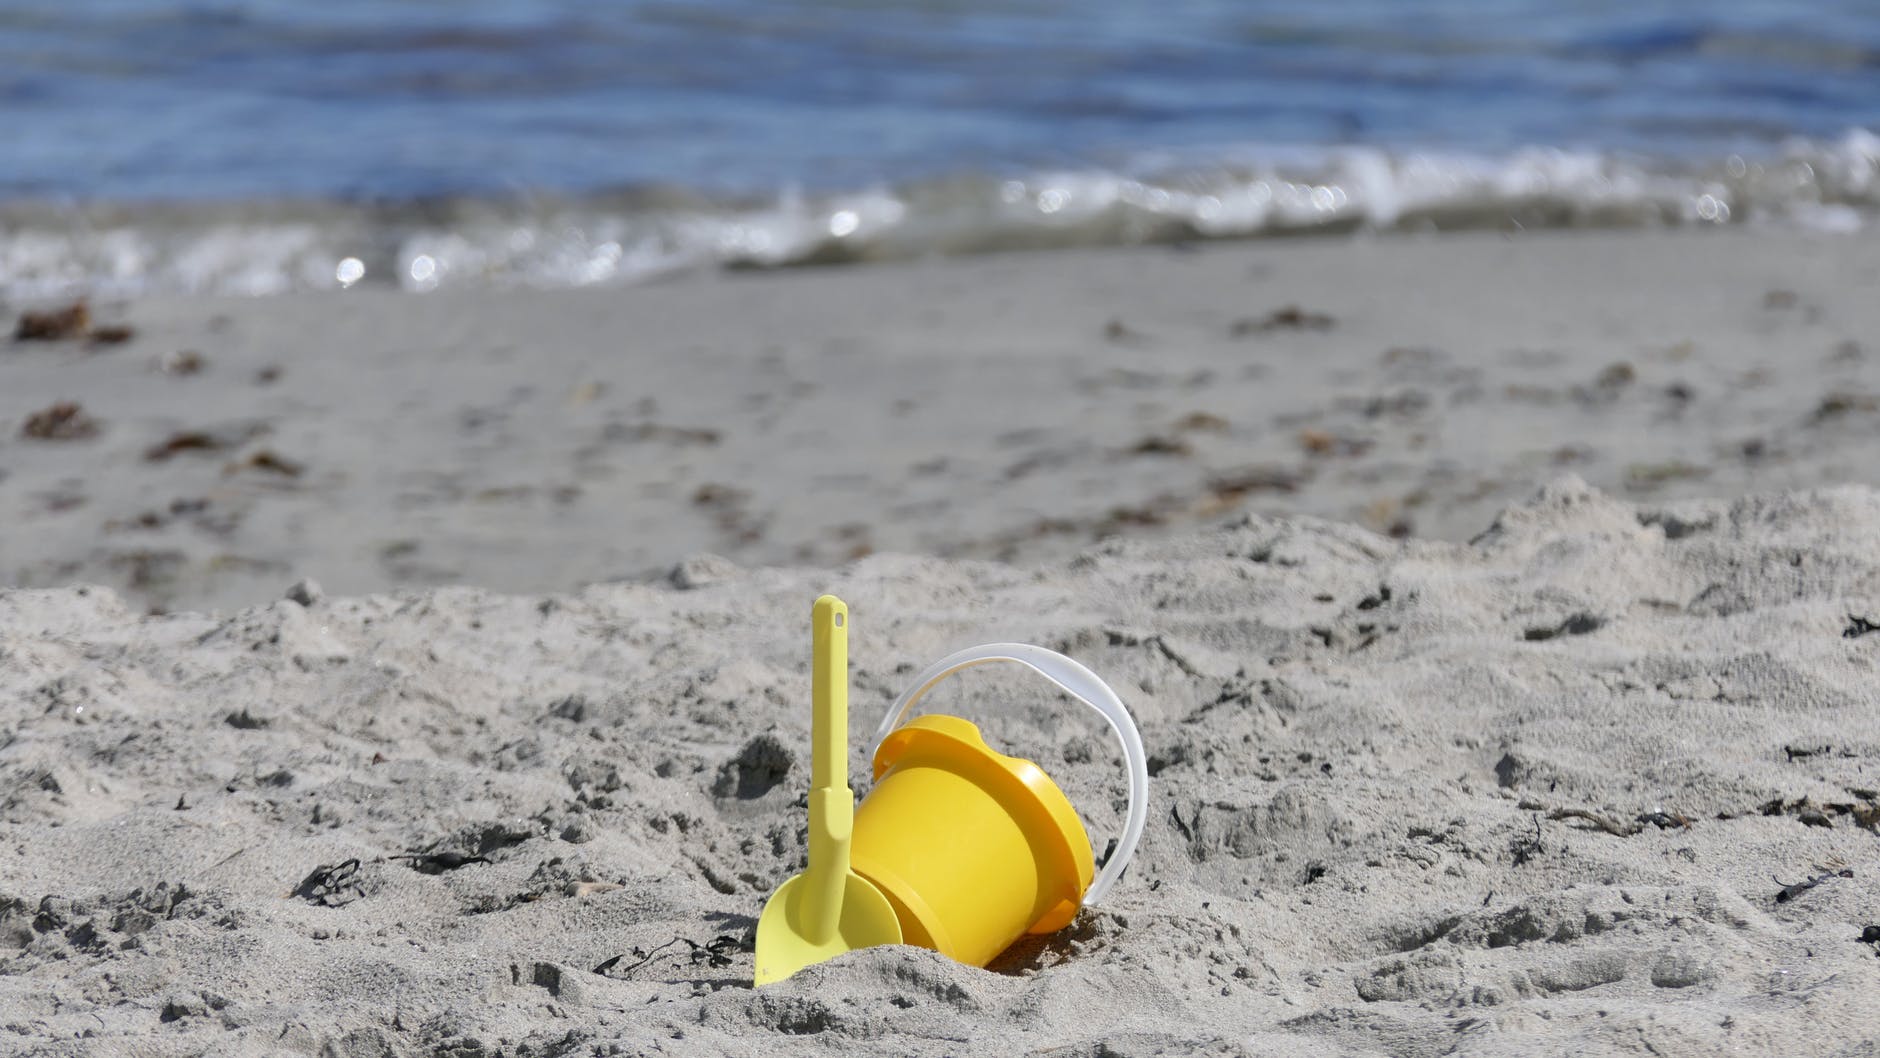 yellow plastic bucket on sand near body of water